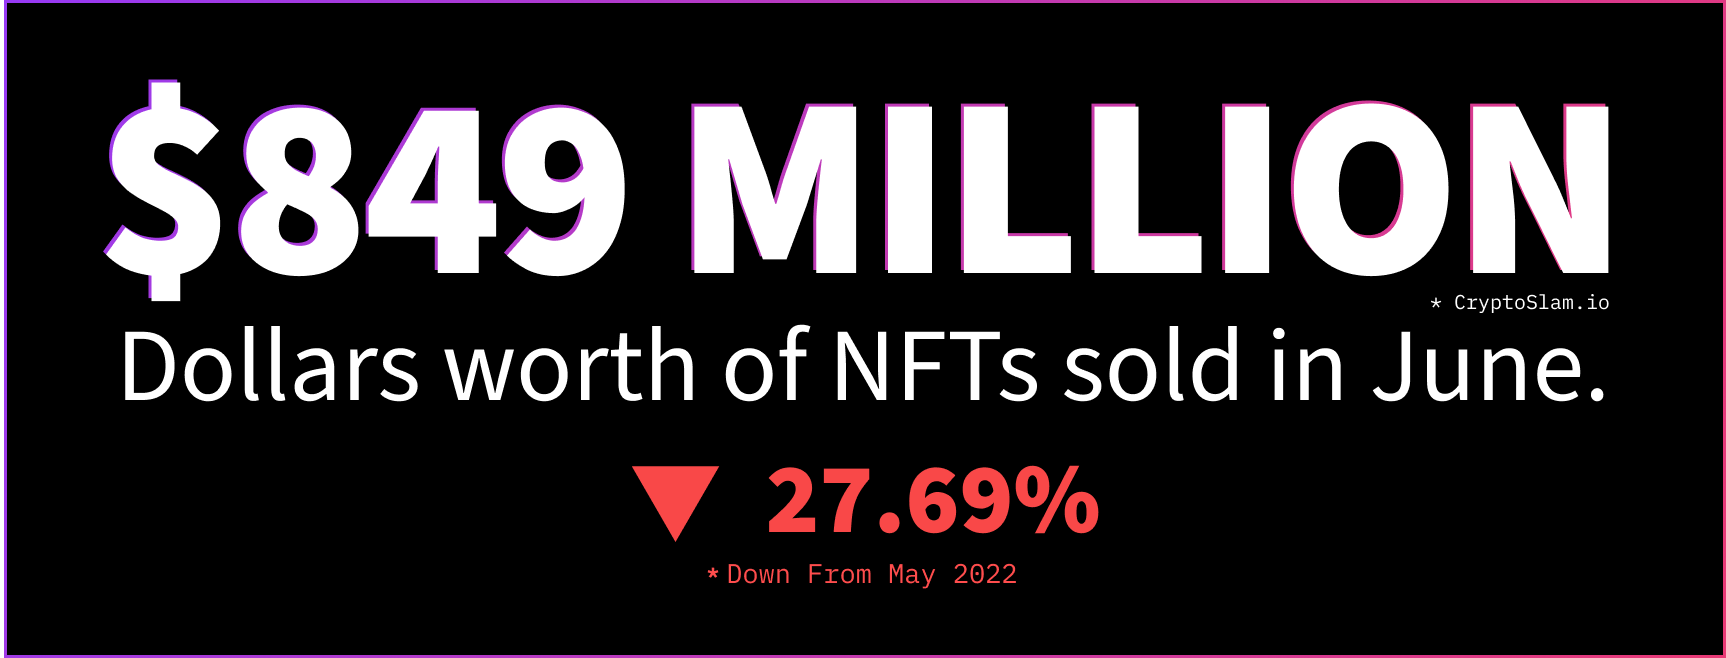 June NFT Stats & News